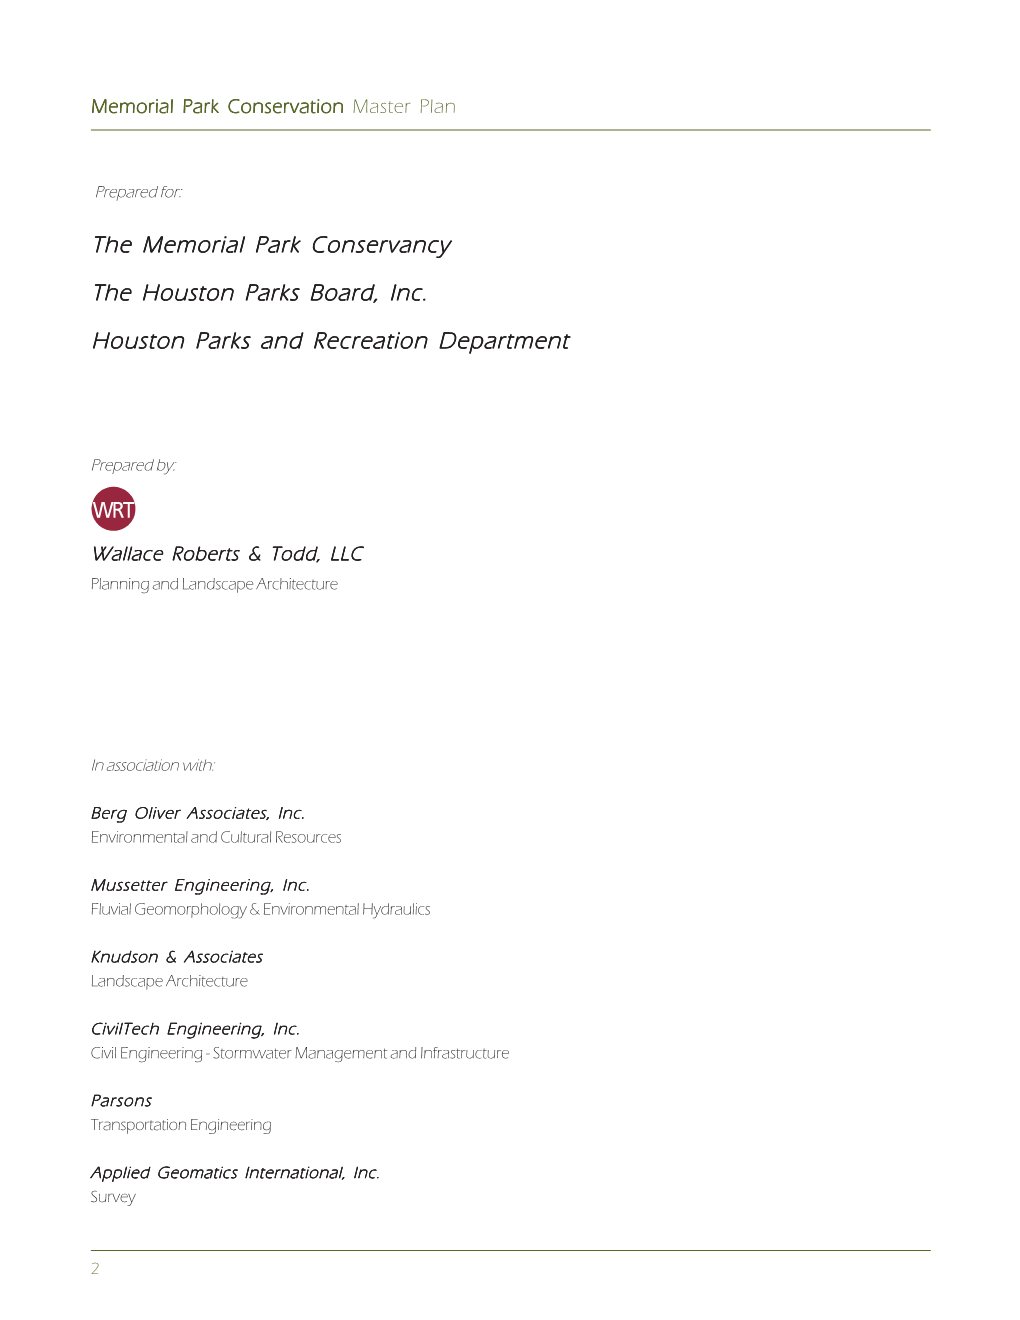 Memorial Park Master Plan